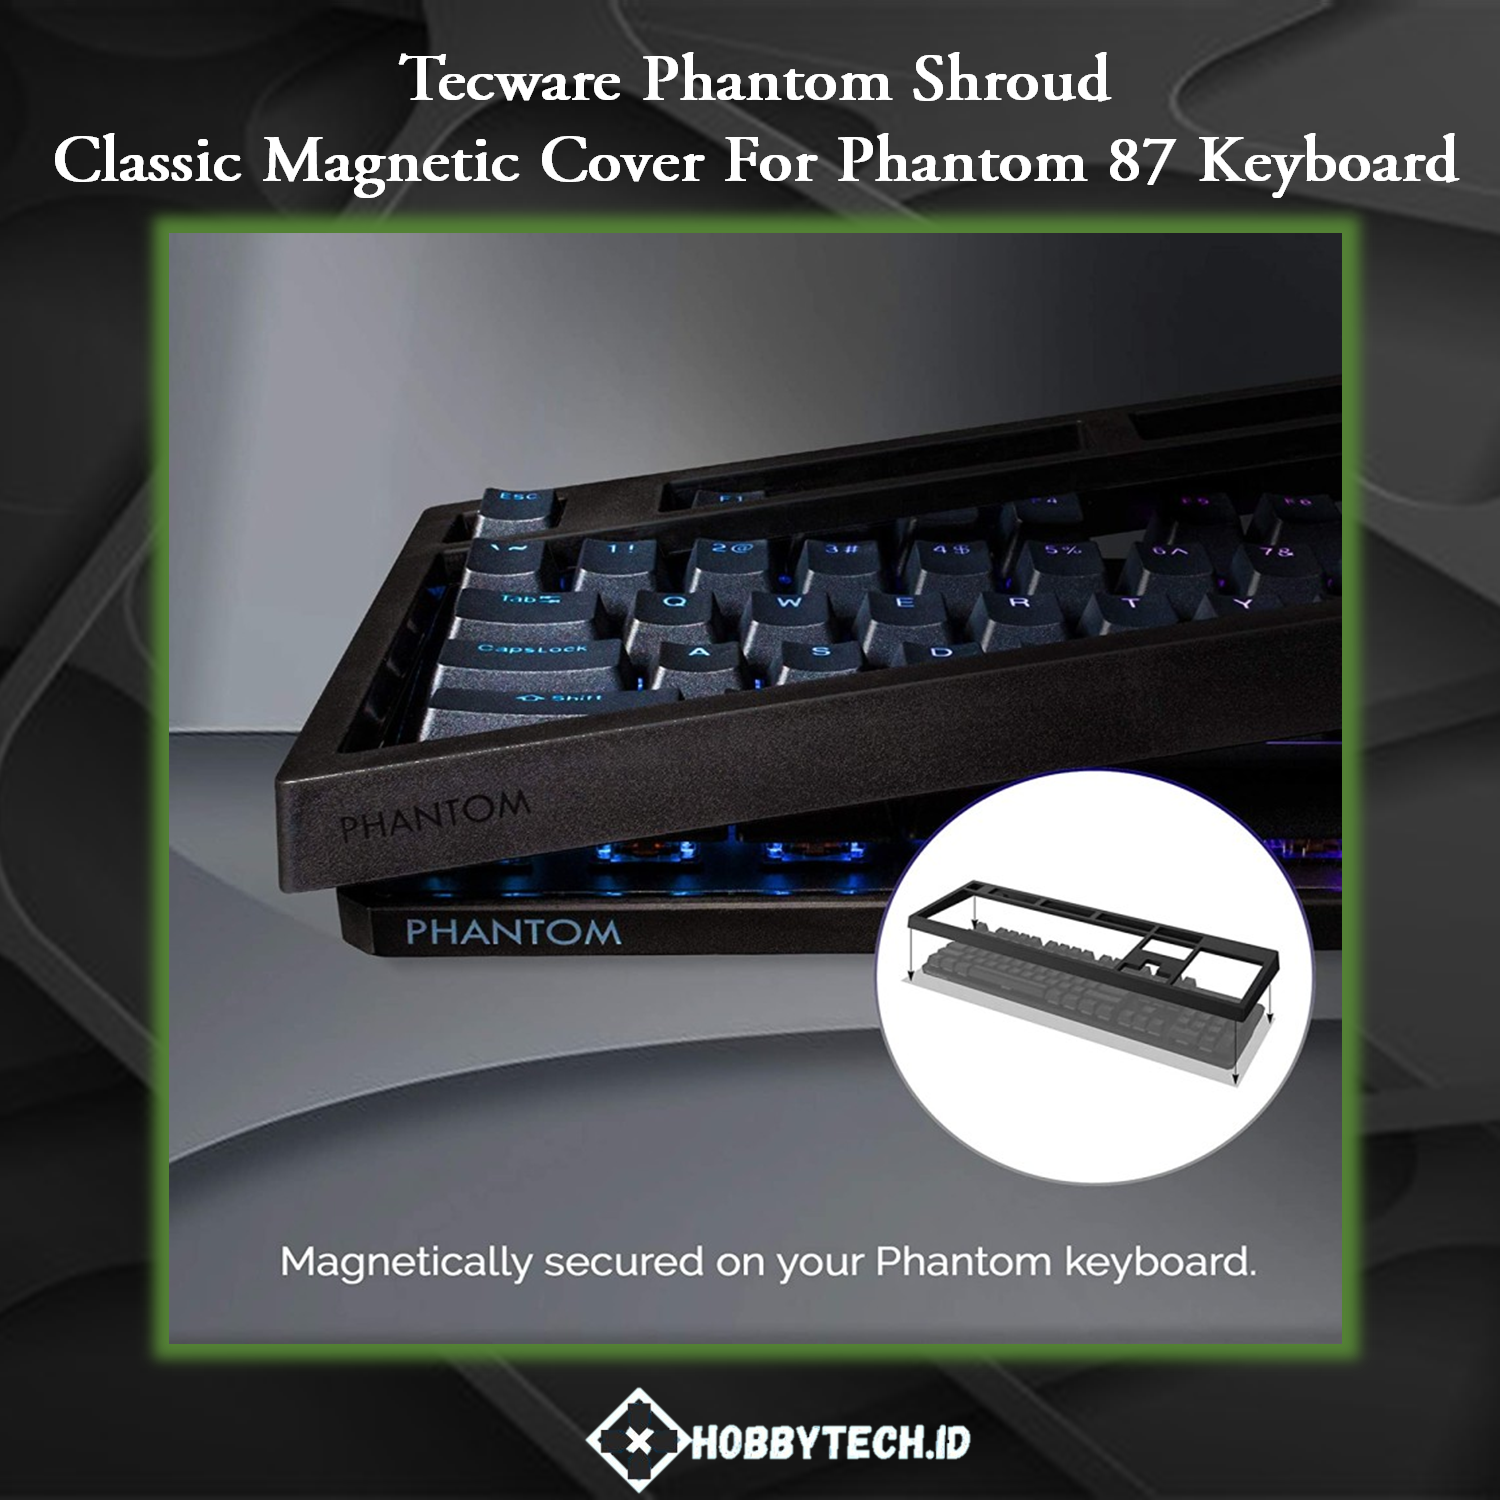 Tecware Phantom Shroud Classic Magnetic Cover For Phantom 87 Keyboard